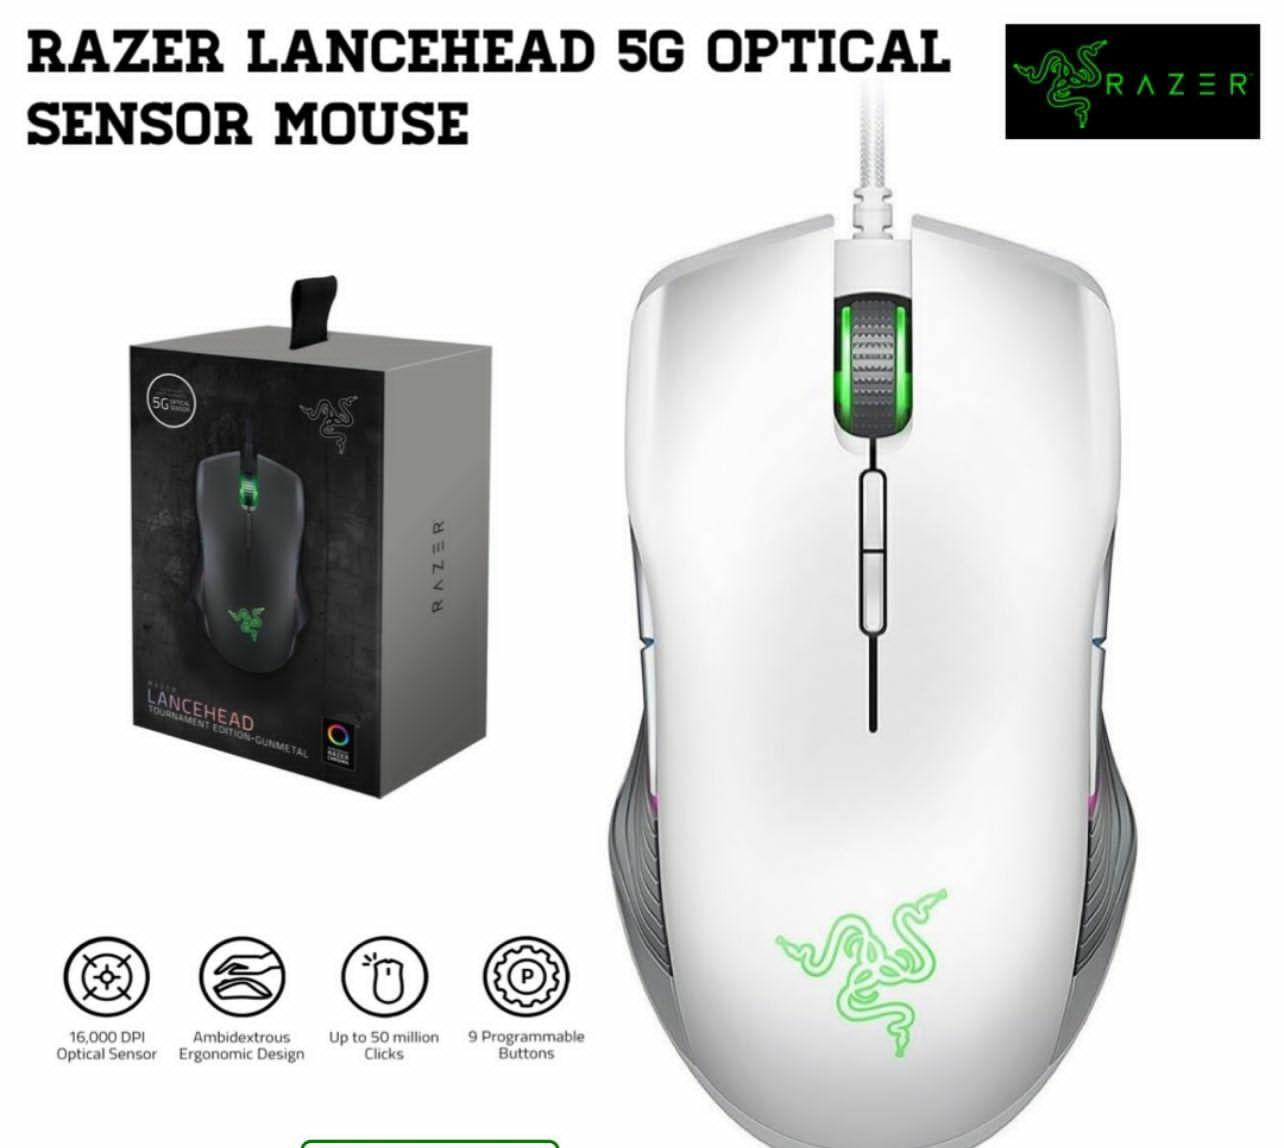 Razer Lancehead 5G Optical Sensor Mouse